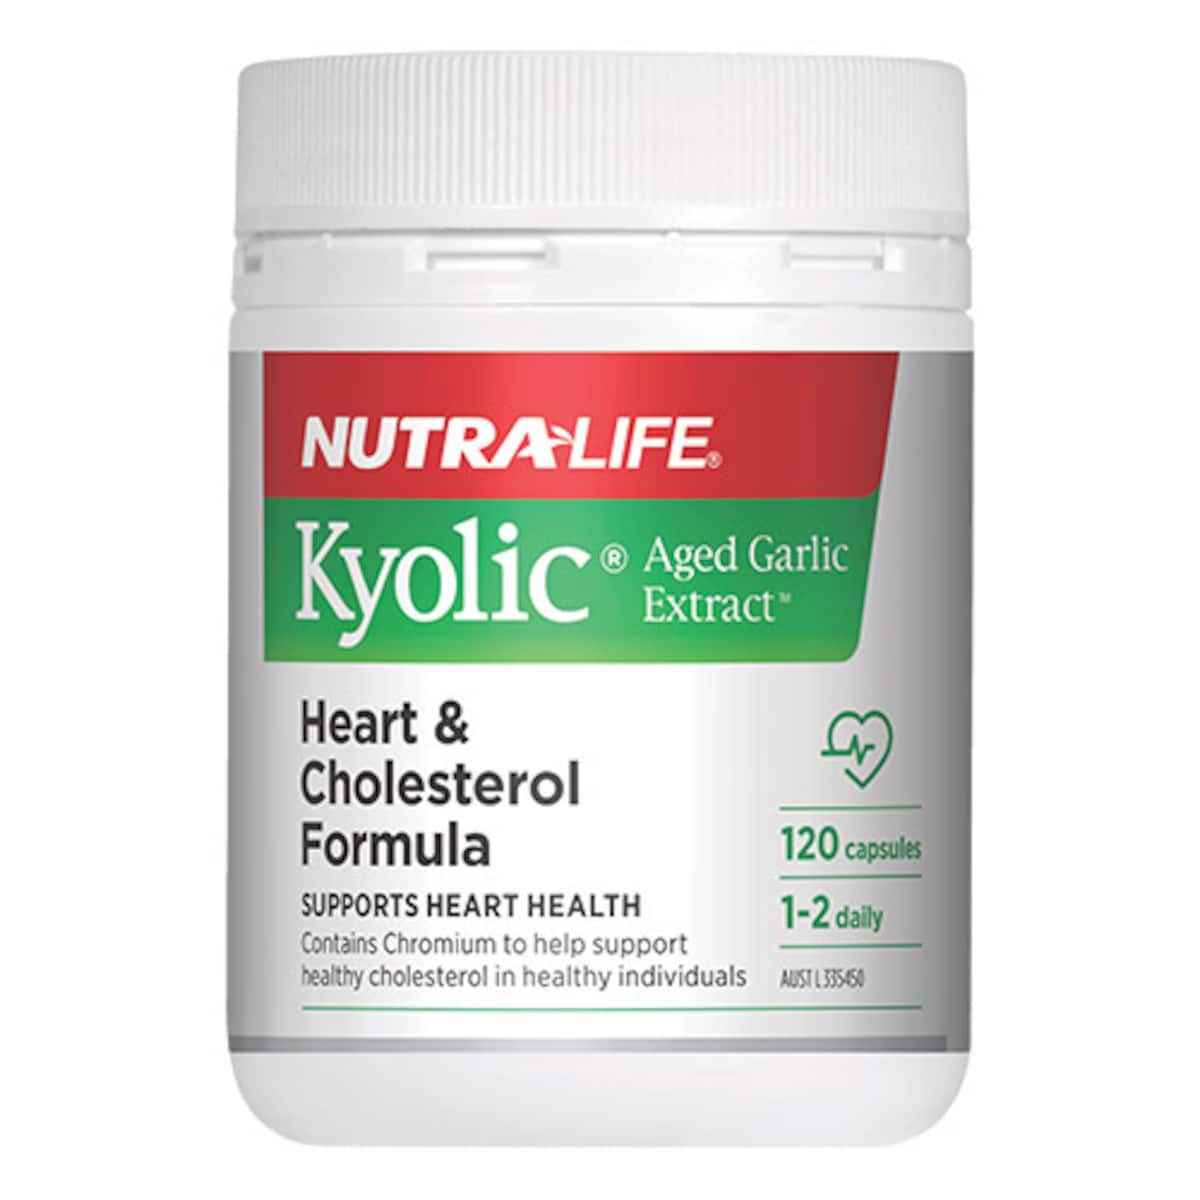 Nutra-Life Kyolic Aged Garlic Extract Heart & Cholesterol 120 Capsules Australia